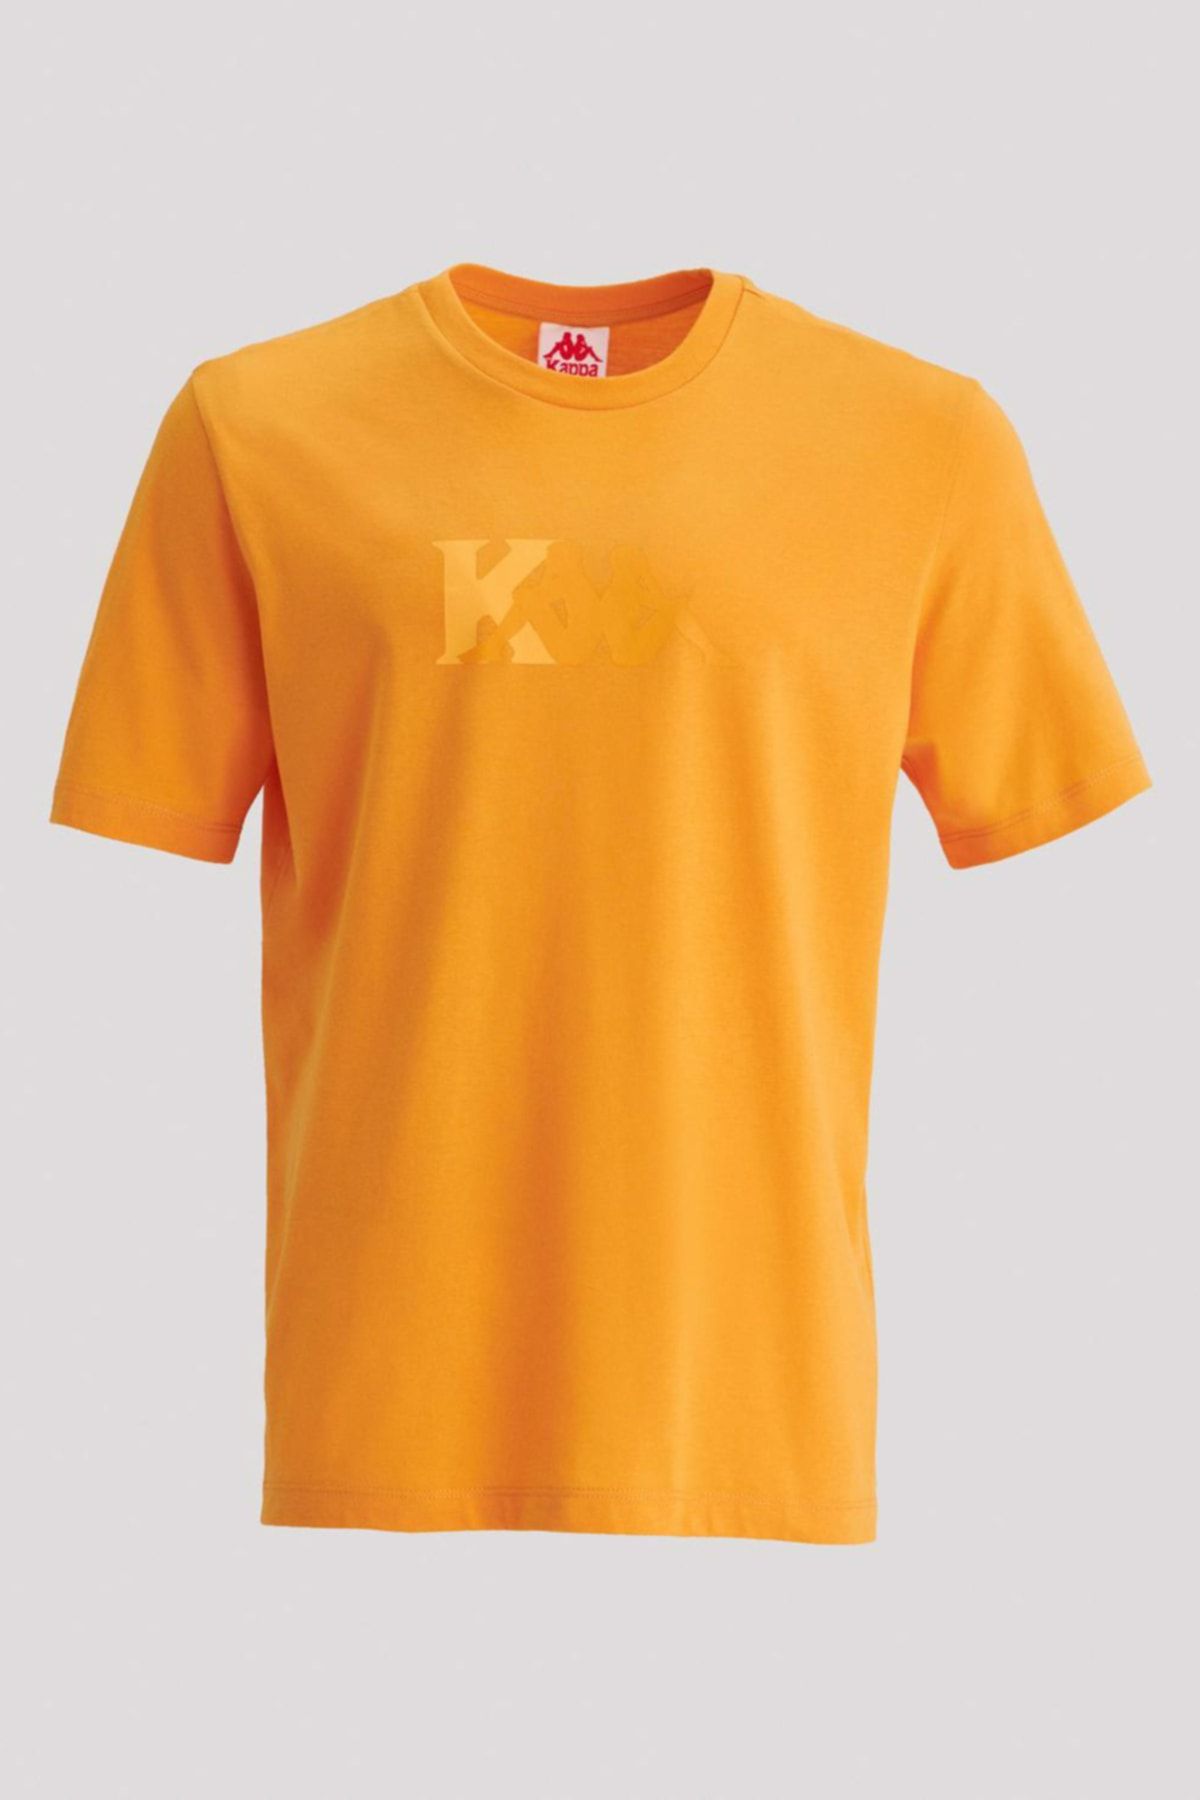 Kappa Authentic Punion Erkek Açık Turuncu Regular Fit Tişört